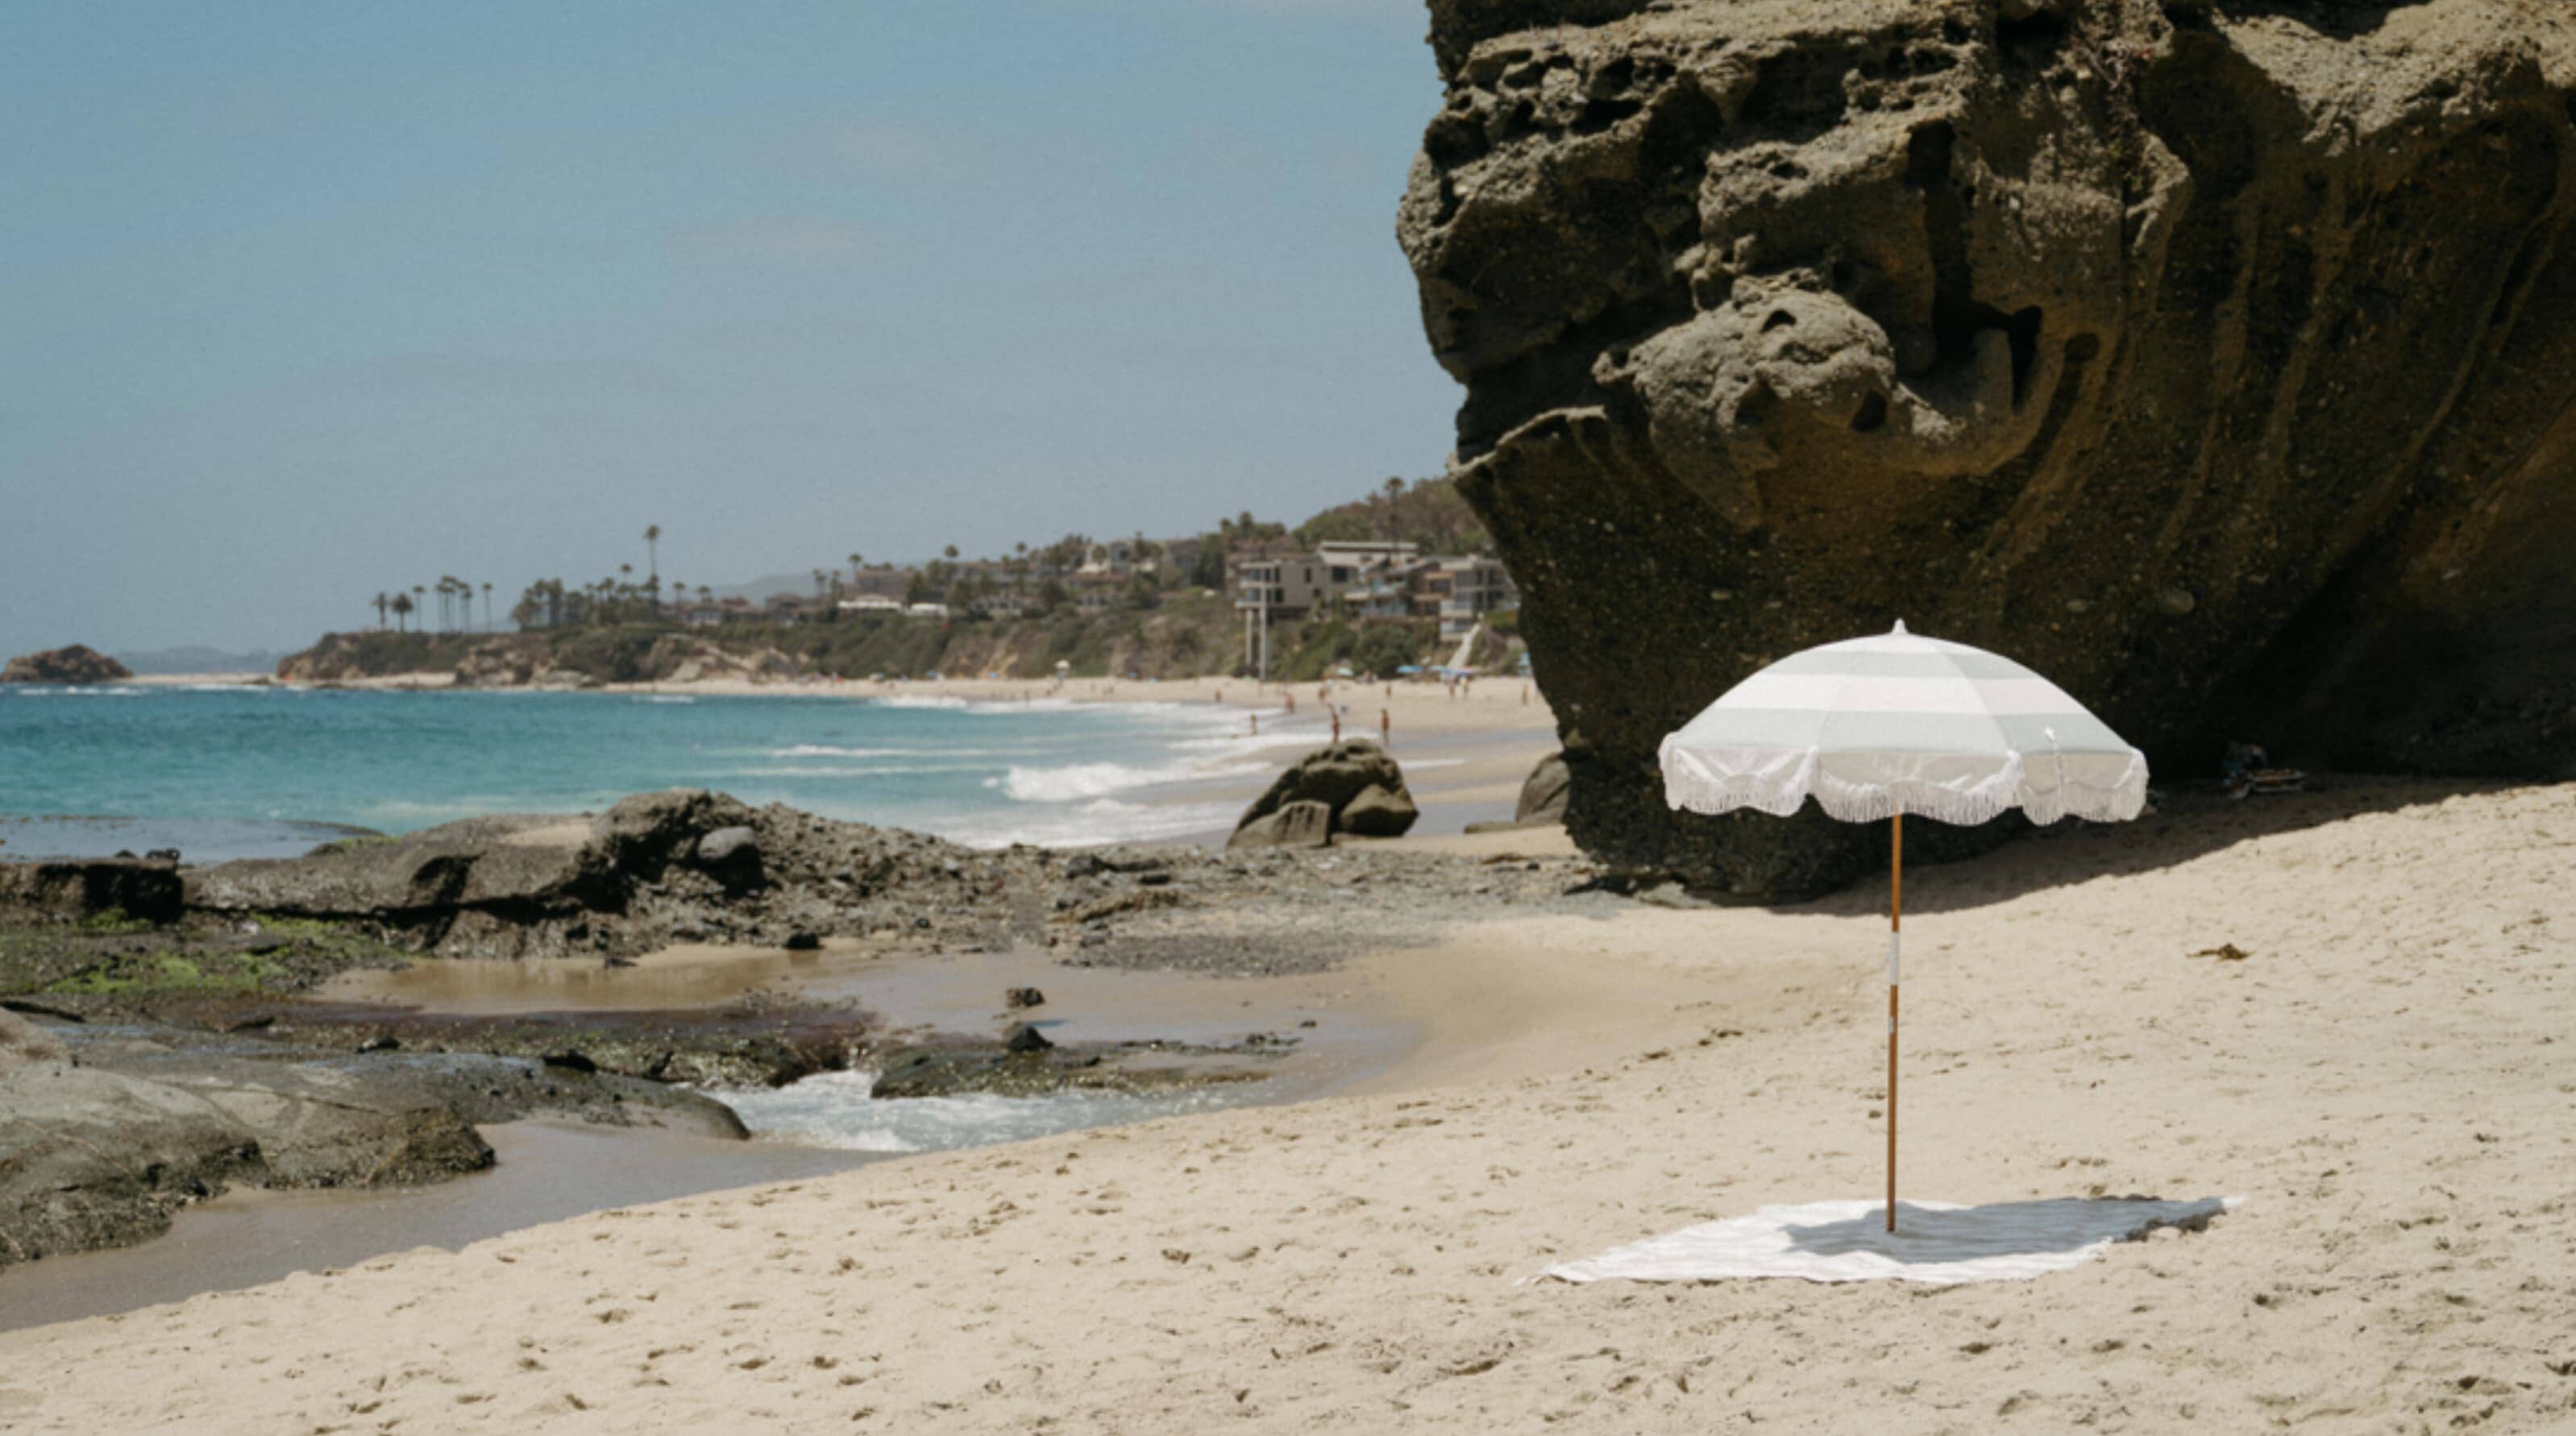 sage holiday beach umbrella on the beach